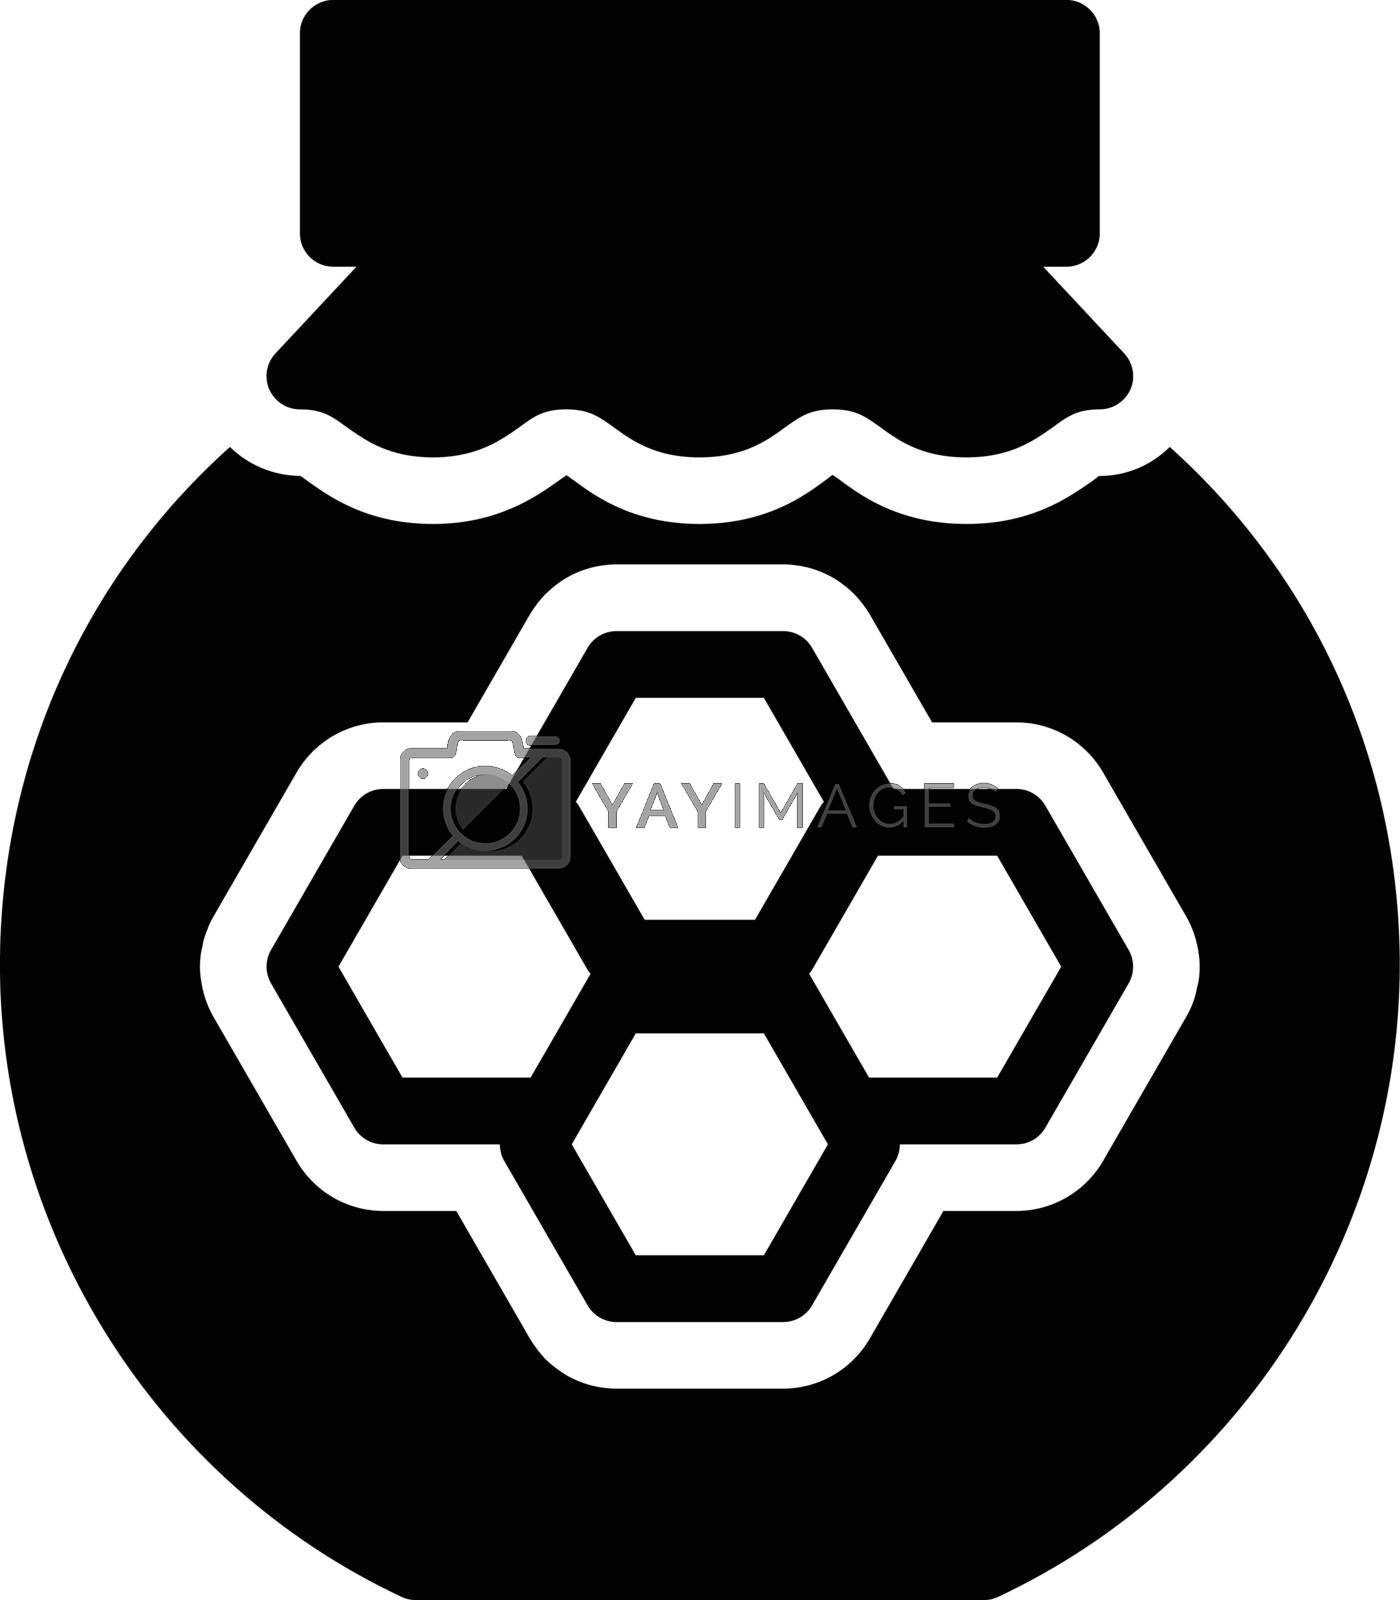 Royalty free image of honey jar by vectorstall